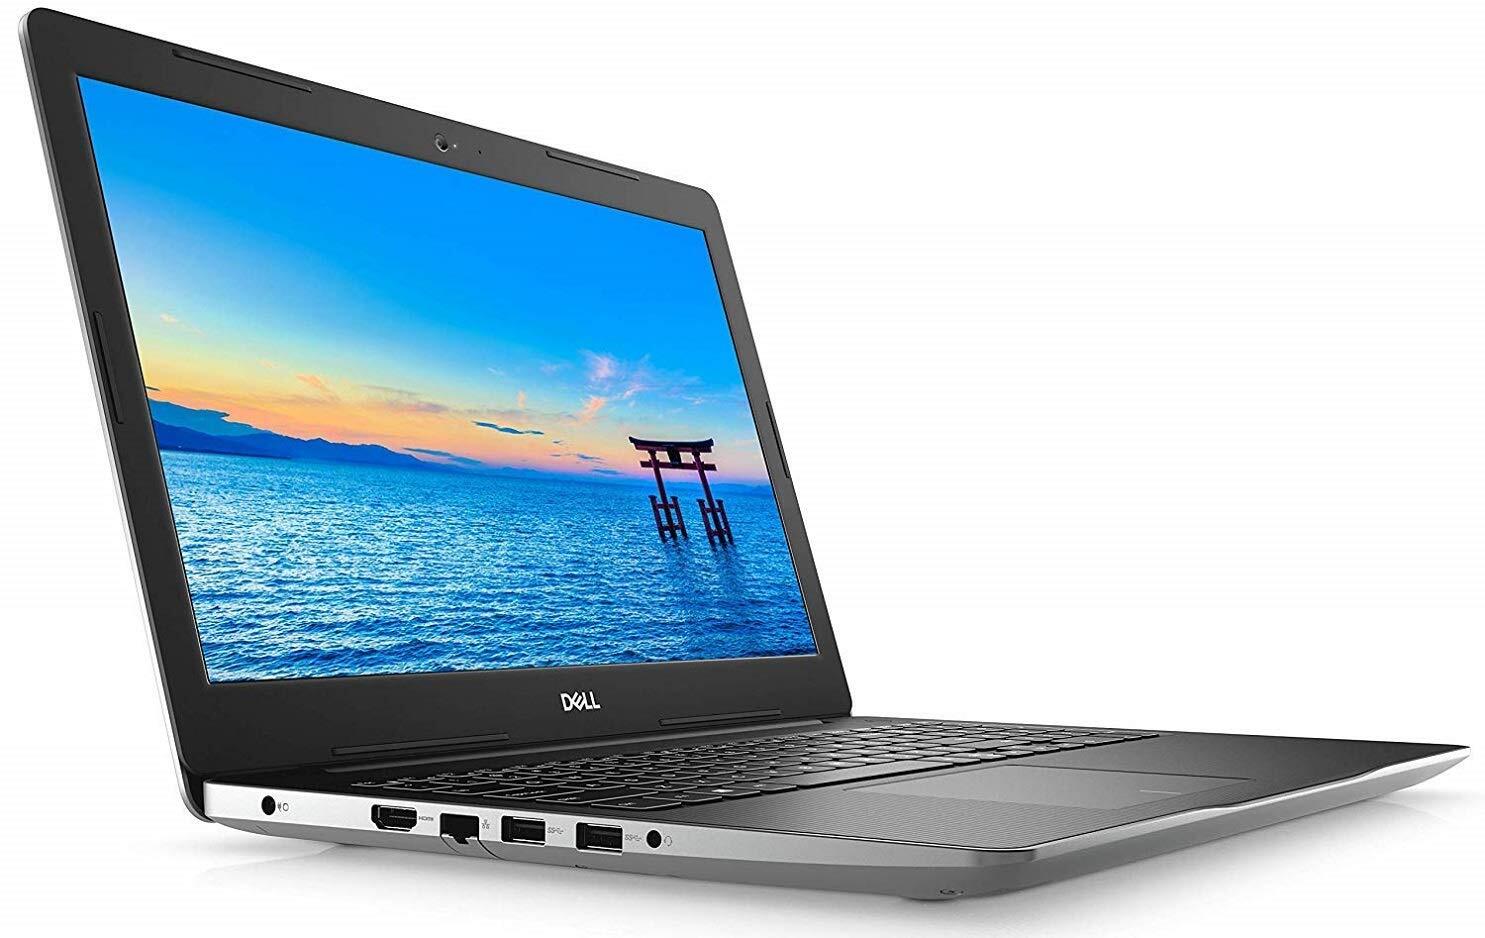 Dell Inspiron 15 3584 Intel Core i3 7th Gen 15.6-inch FHD Laptop (4GB/1TB HDD/W10+ MS) (SILVER/2.03kg) ( Premium Model)( M.2 SLOT OPTIONS)-M000000000283 www.mysocially.com